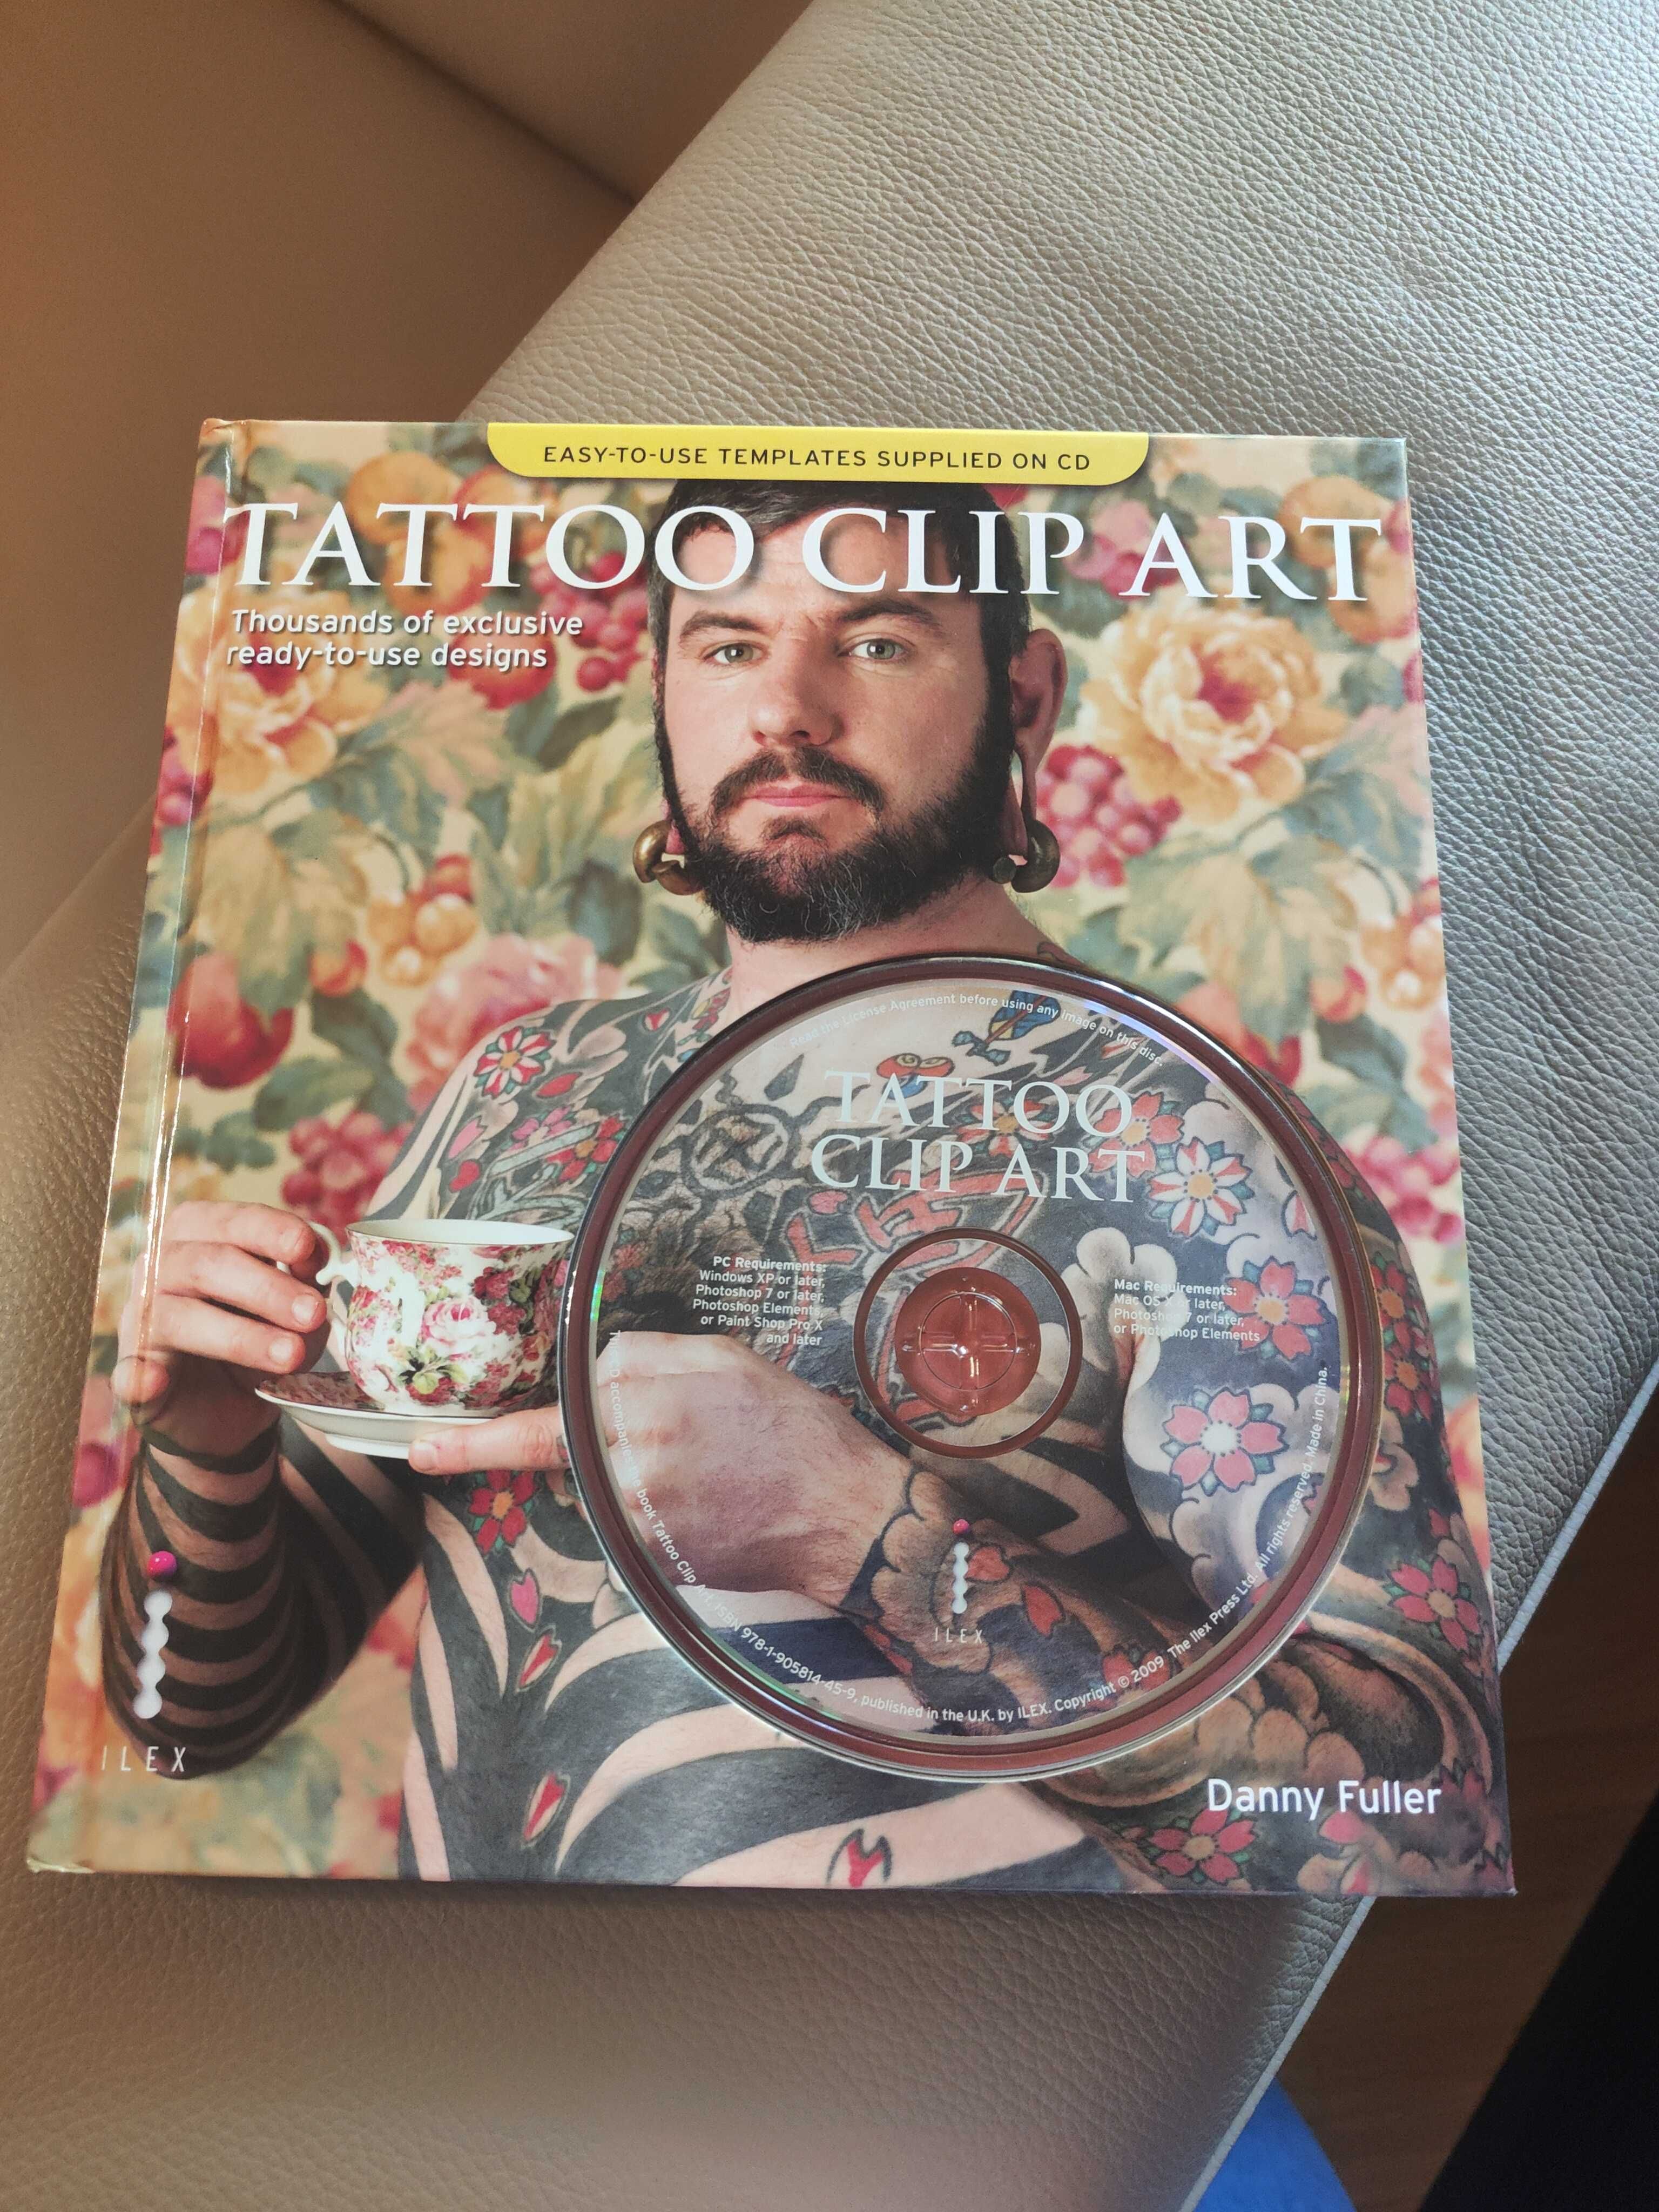 książka album "Tattoo Clip Art" Danny Fuller z płytą CD, tatuaż UNIKAT